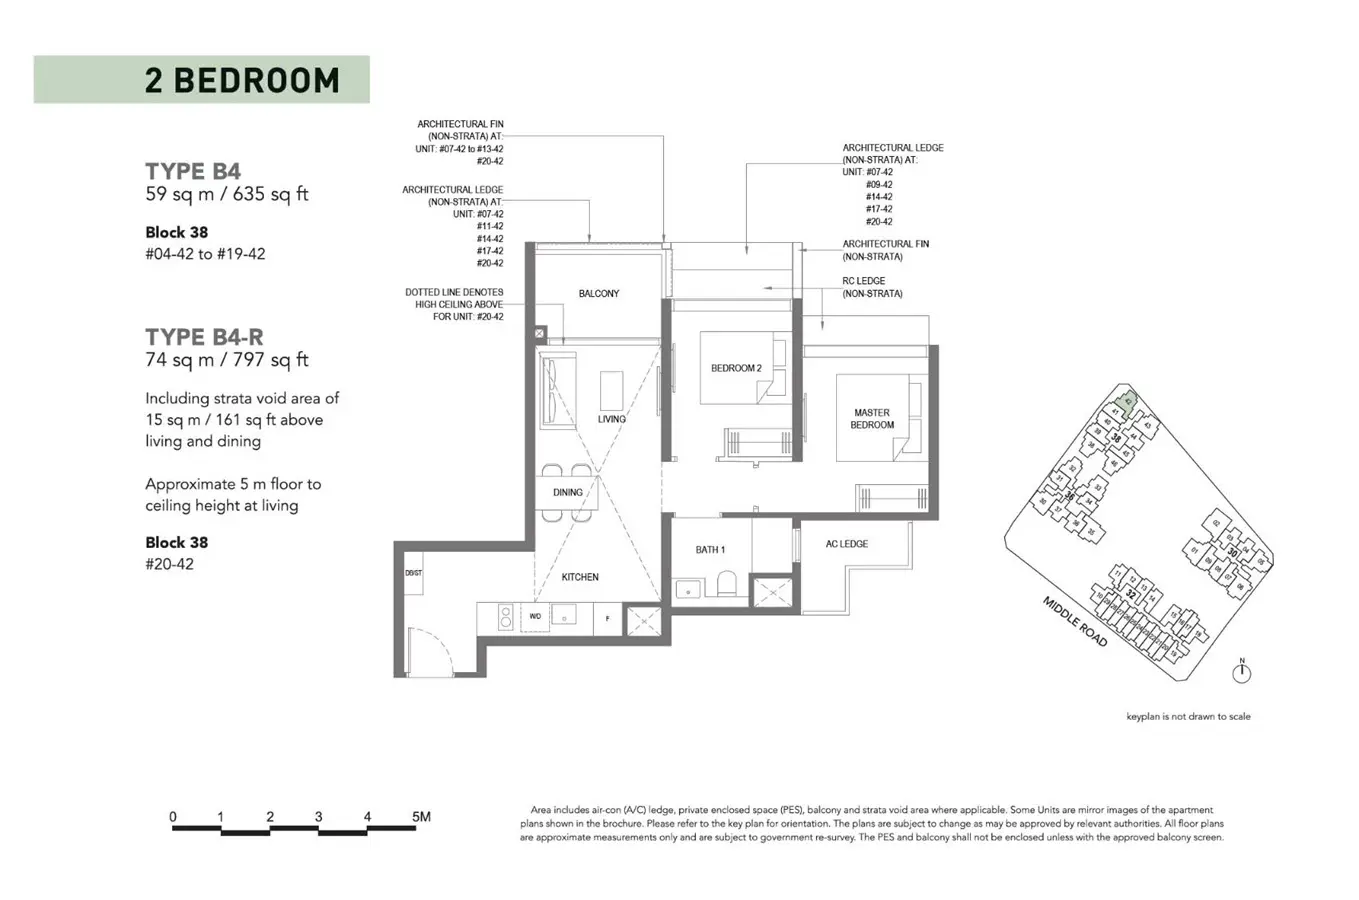 The M - Floor Plan - 2 Bedroom B4, B4-R